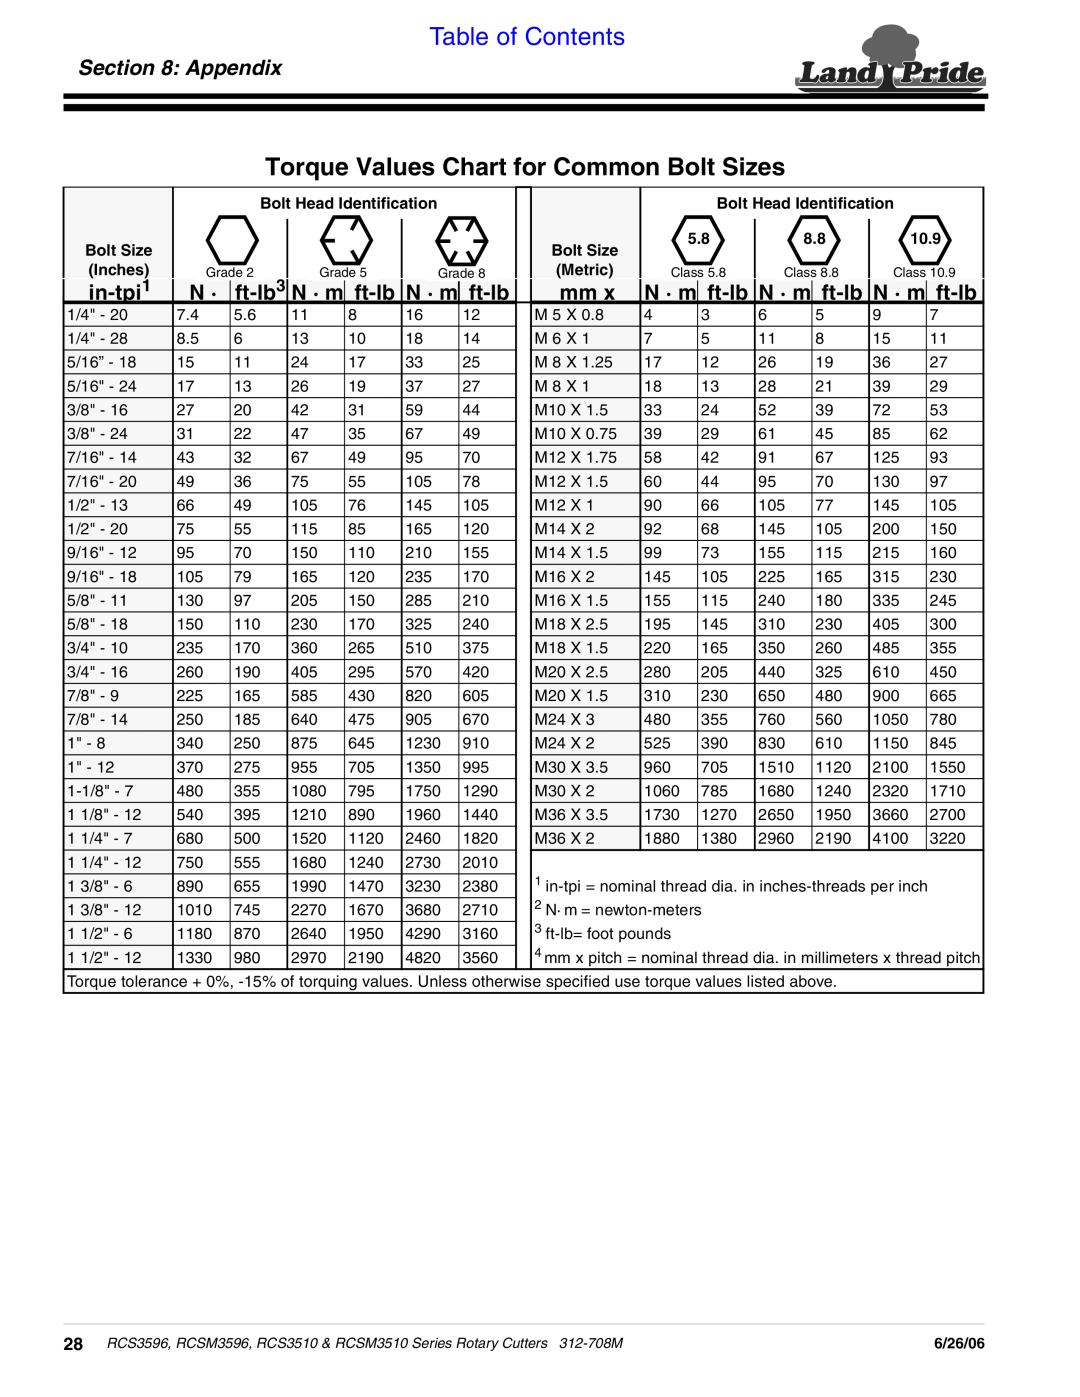 Land Pride RCSM3596, RCS3510 Torque Values Chart for Common Bolt Sizes, Appendix, in-tpi1, ft-lb3 N · m ft-lbN · m ft-lb 